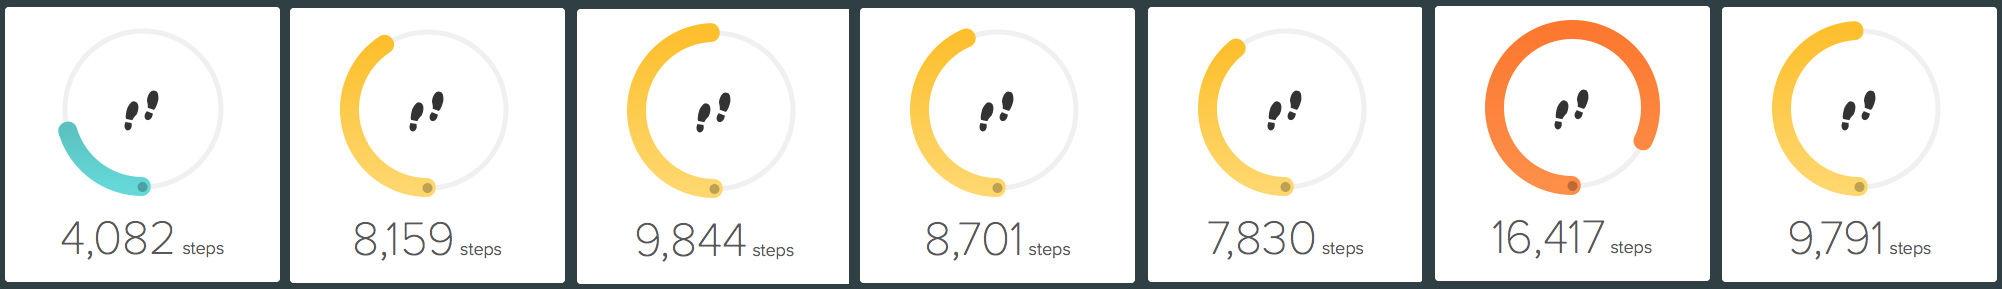 64,824 steps